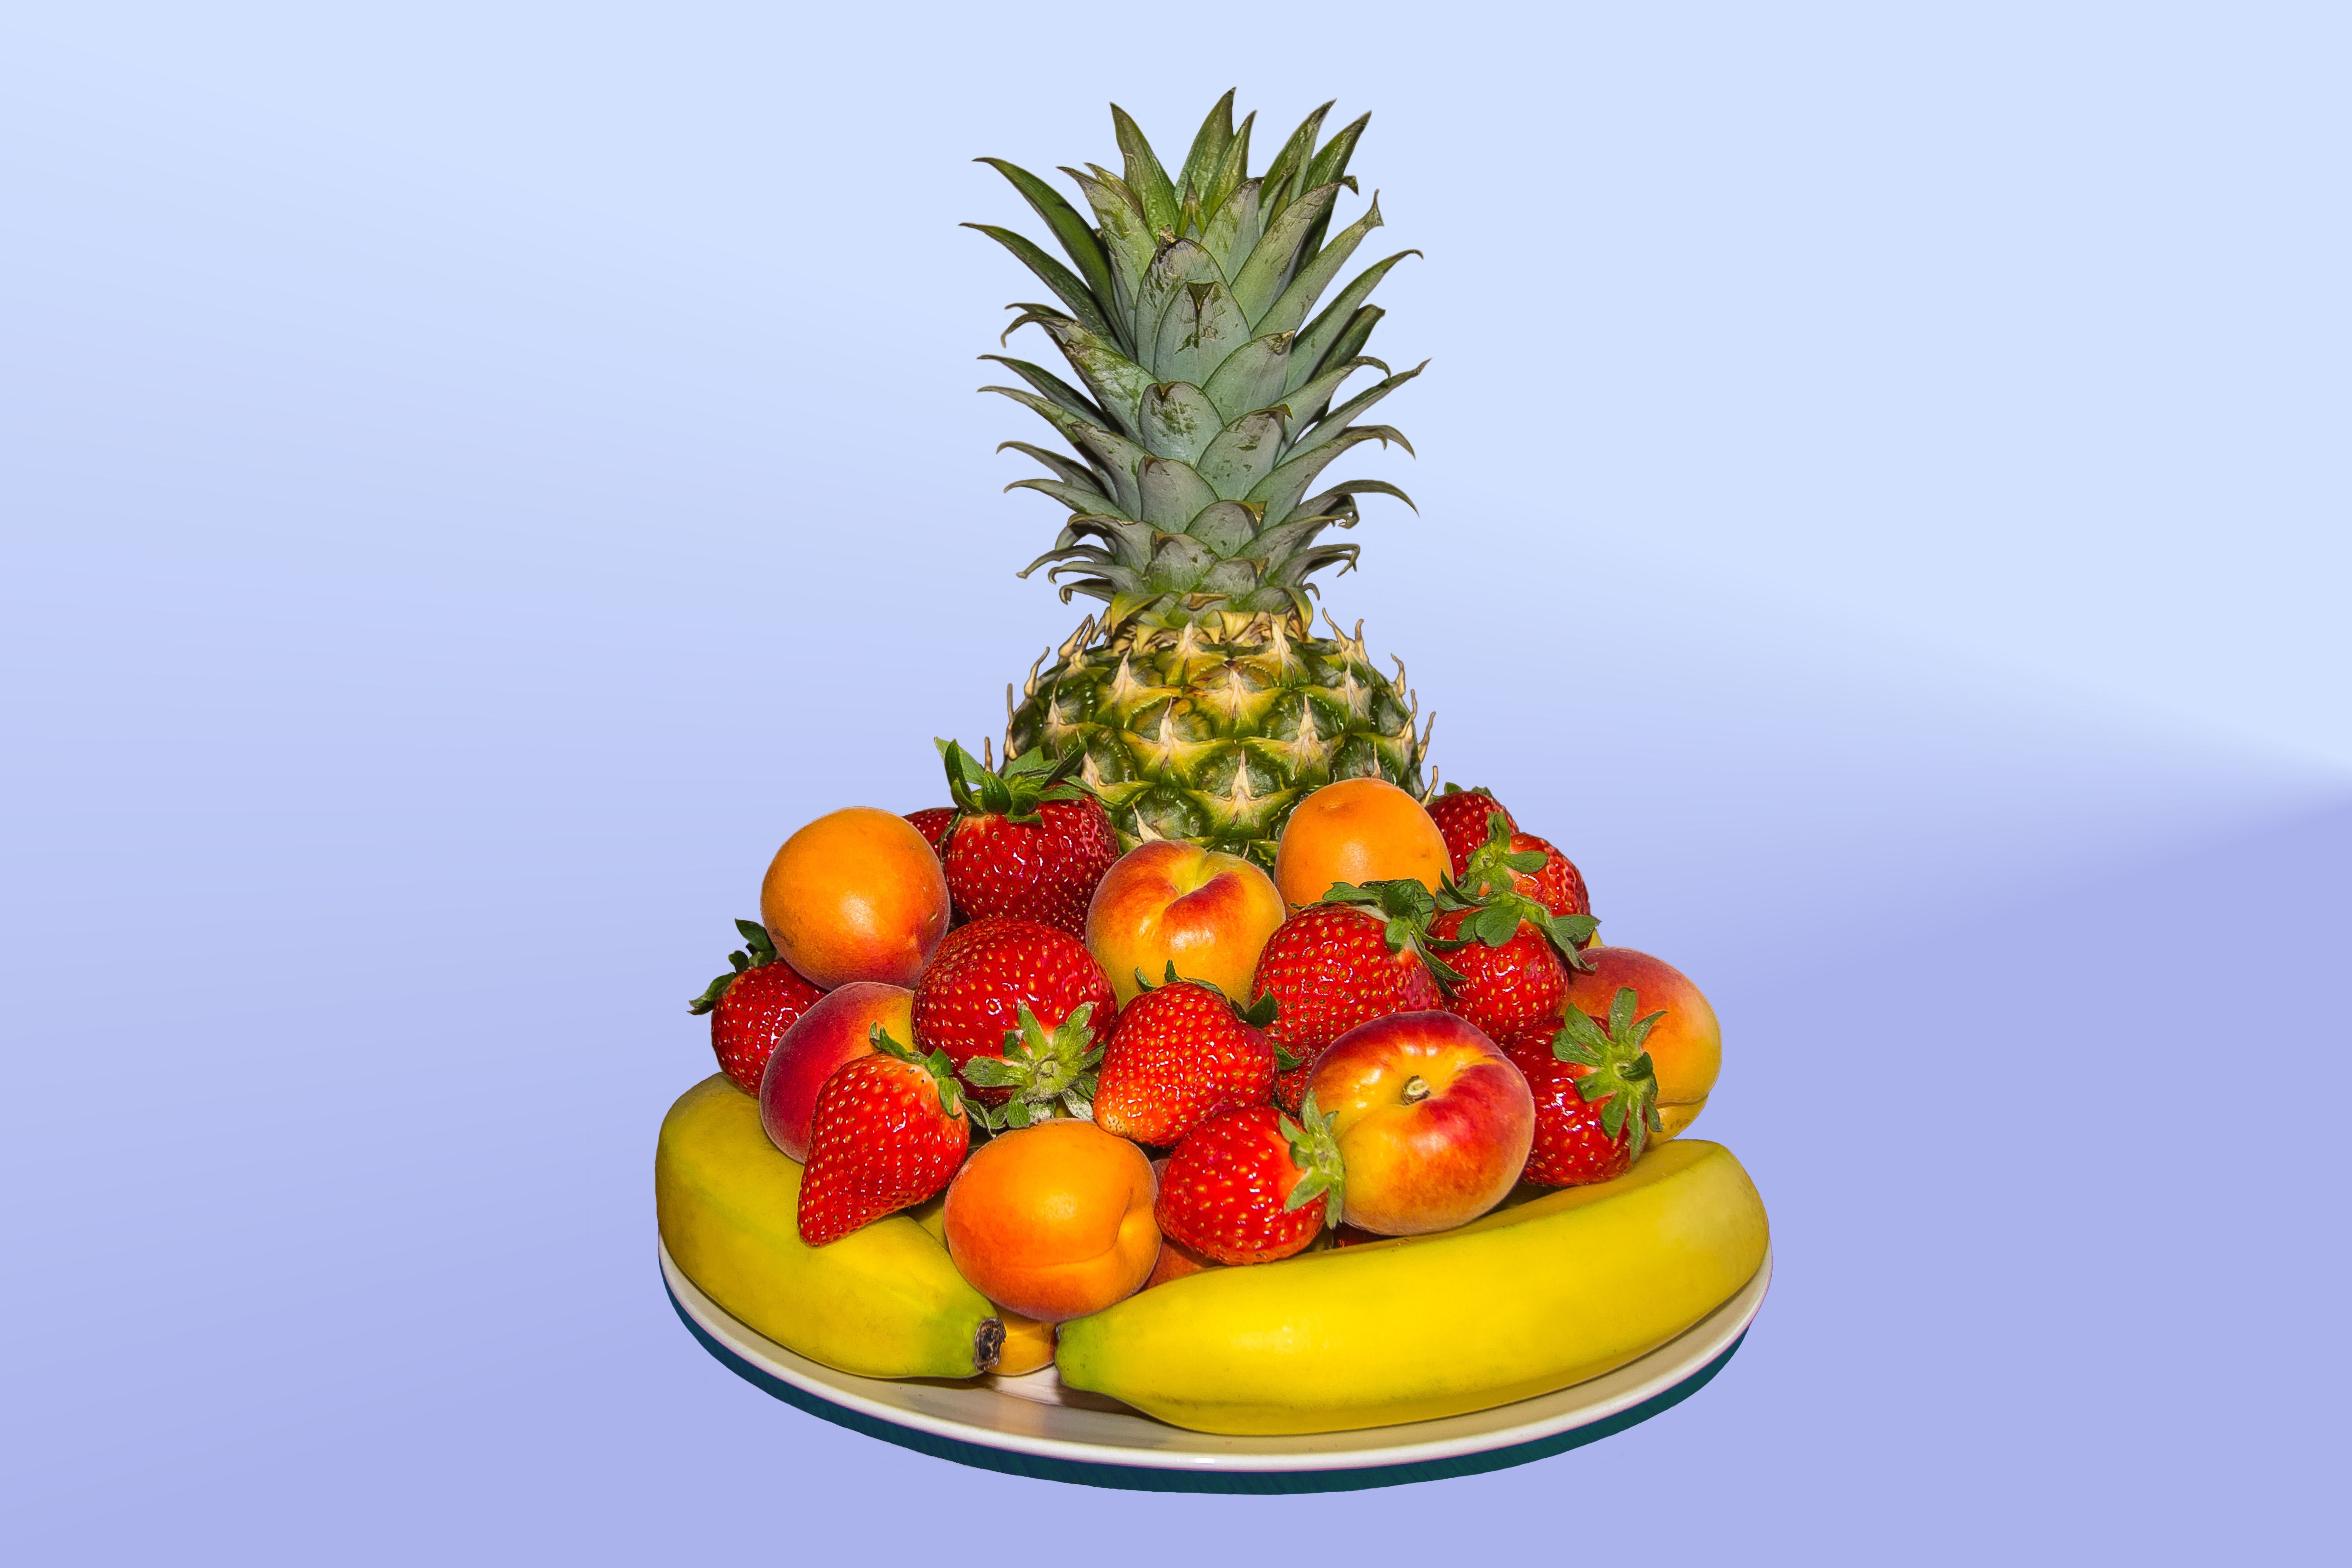 pineapple strawberry apple and banana fruits